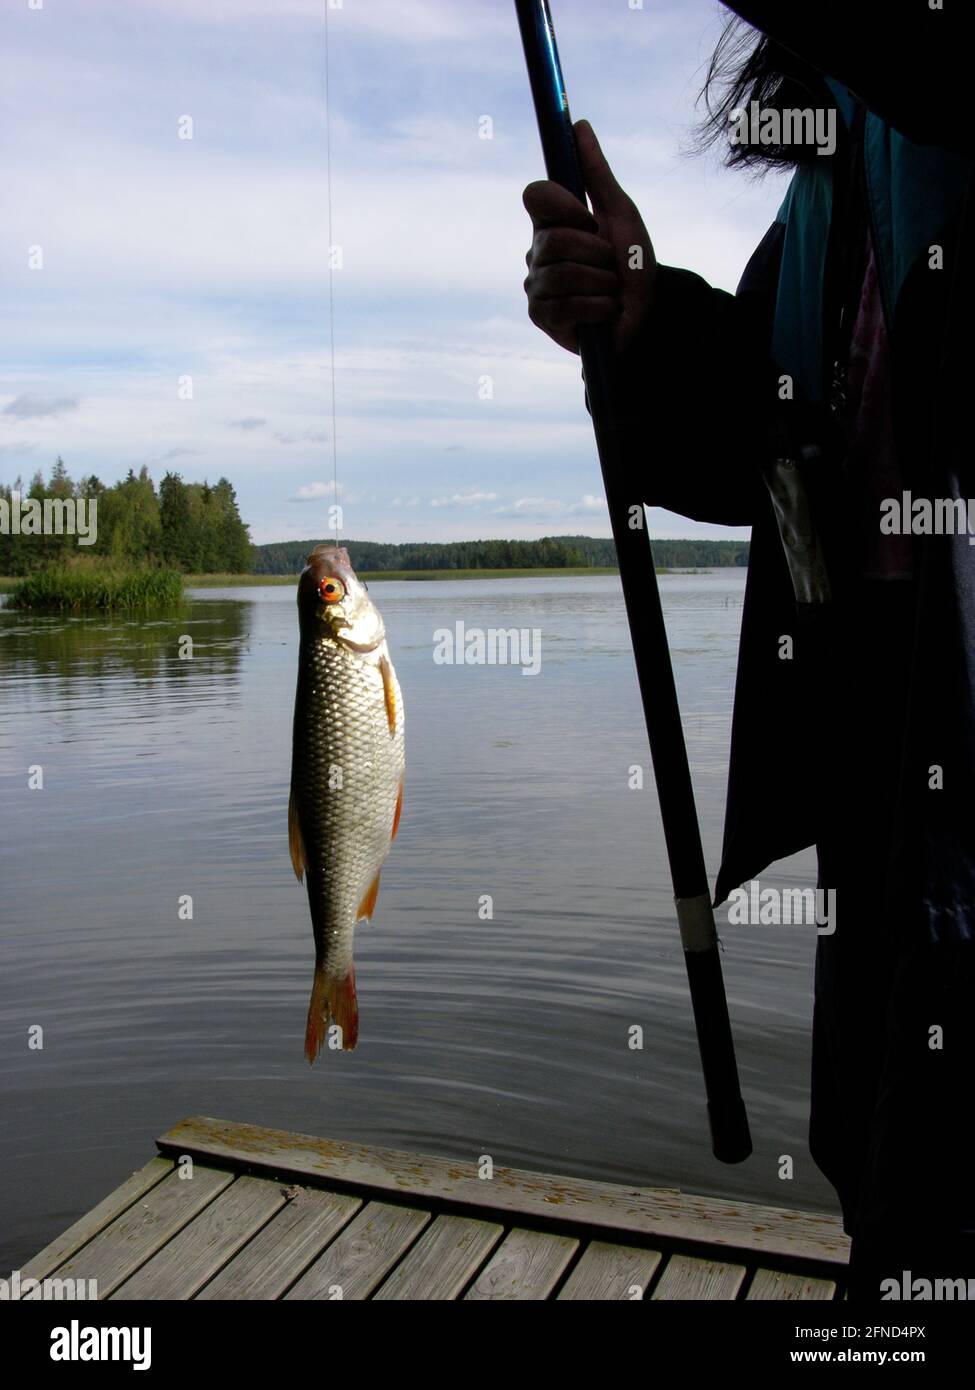 Pescador pescando caña de pescado y línea Fotografía de stock - Alamy